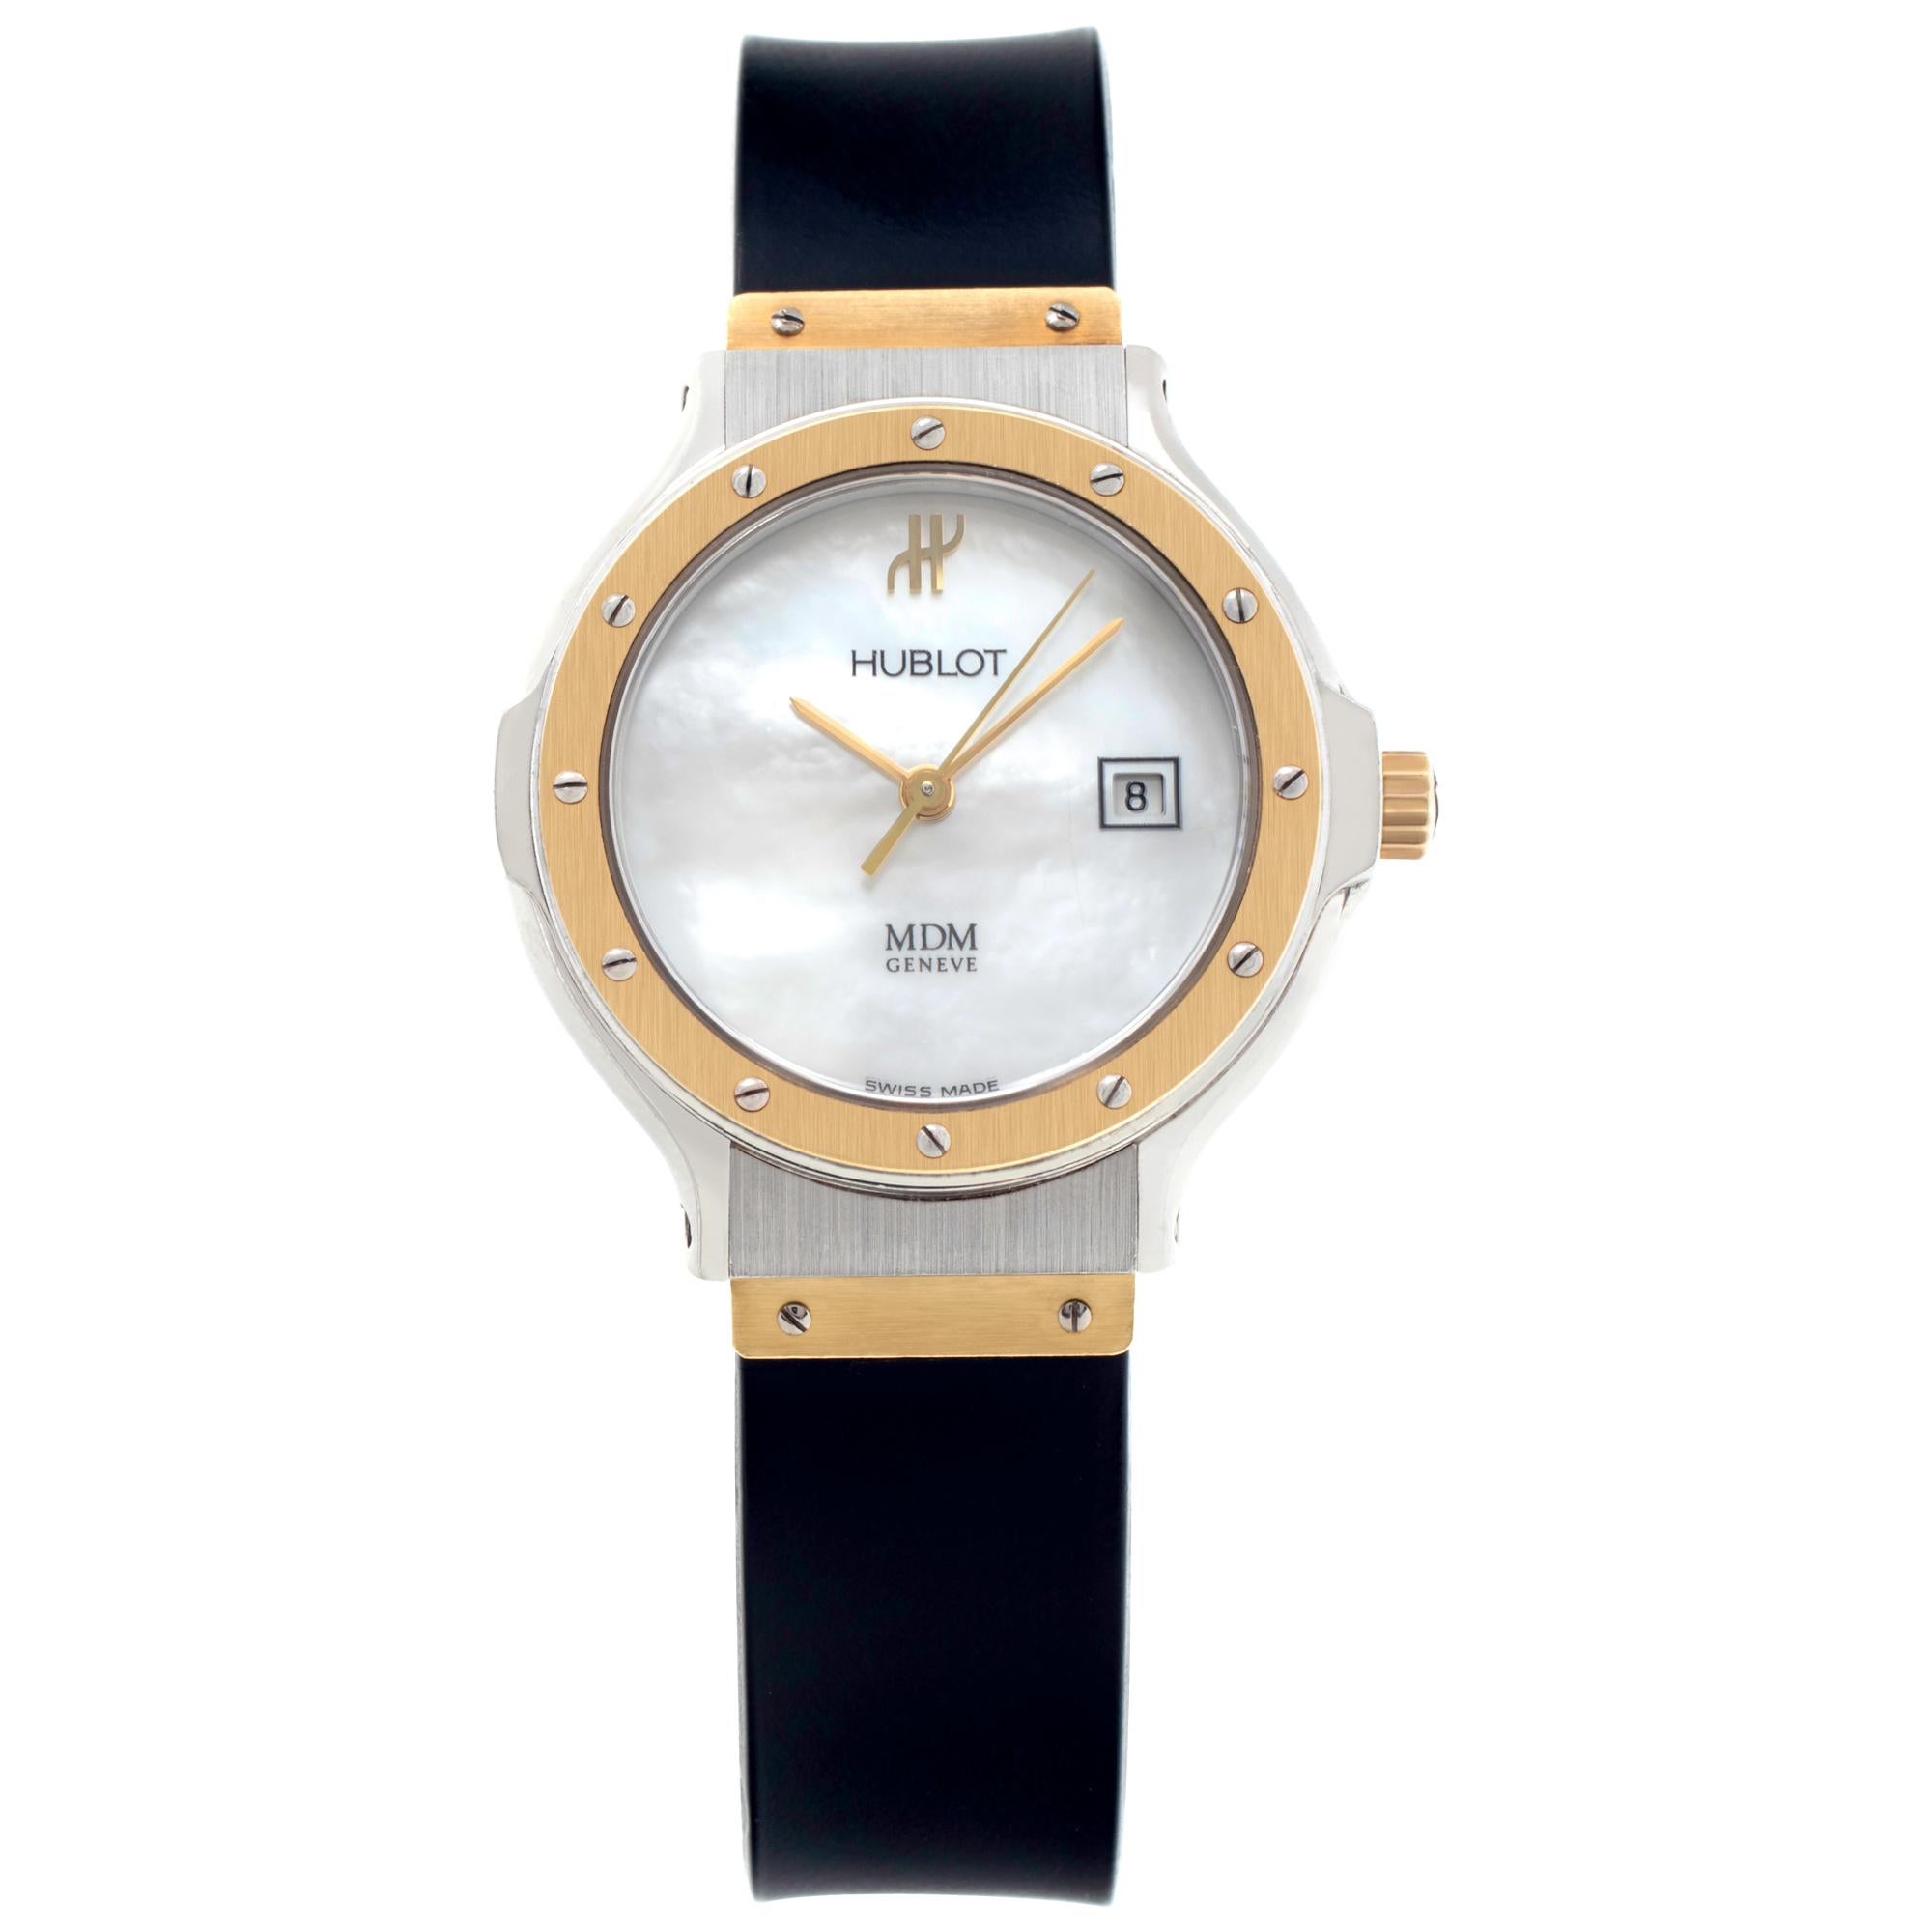 Hublot MDM 1393.2 Stainless Steel & Gold Plated Wristwatch